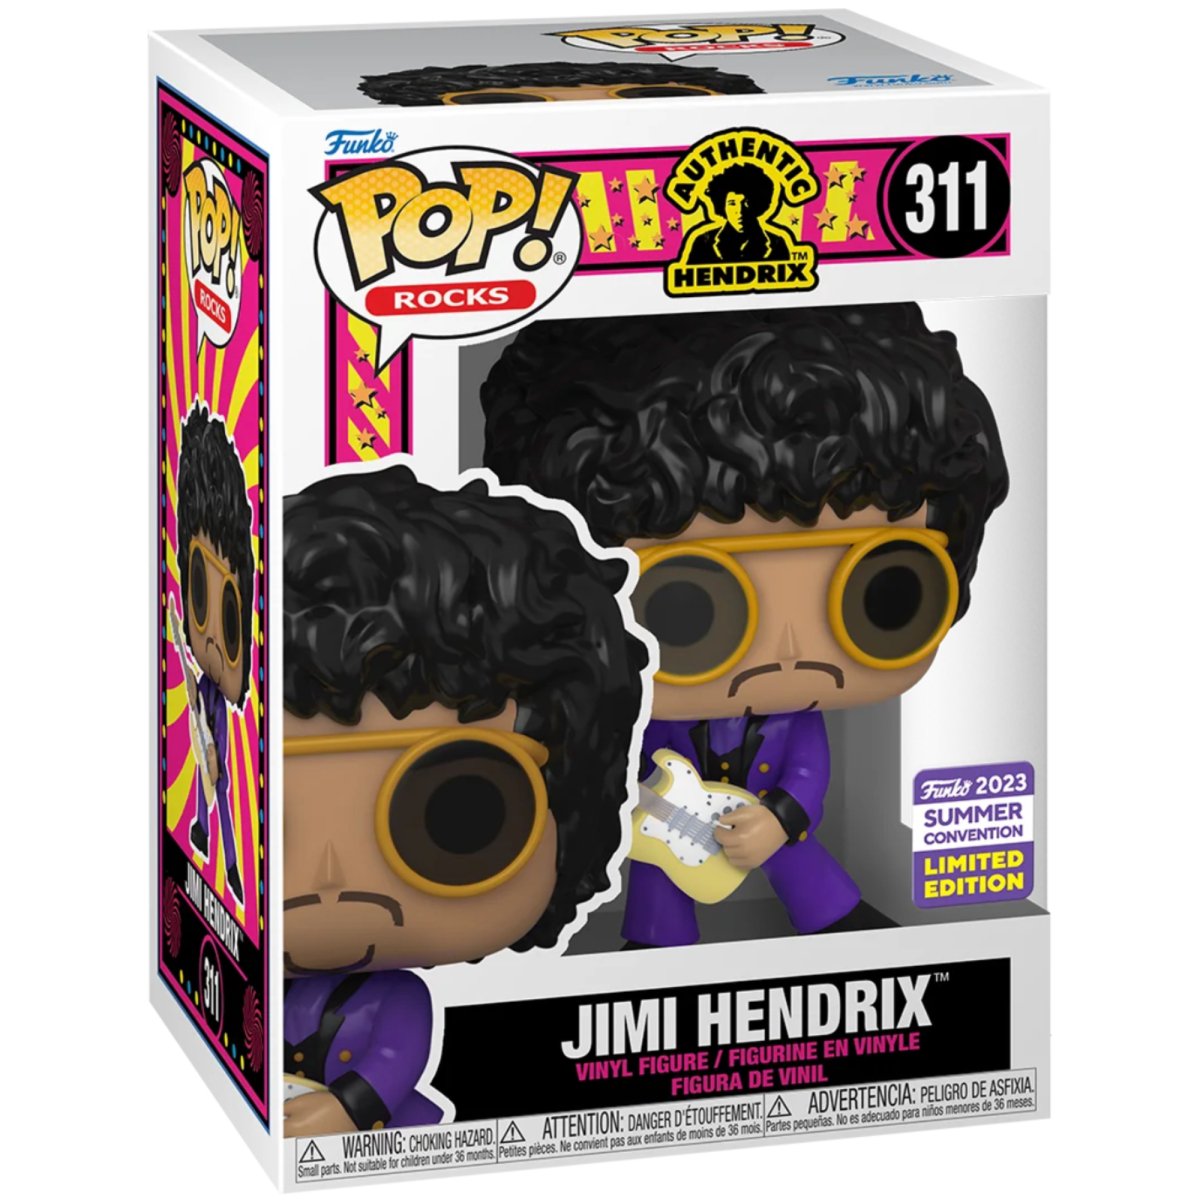 Authentic Hendrix - Jimi Hendrix (2023 Summer Convention Limited Edition) #311 - Funko Pop! Vinyl Rocks - Persona Toys